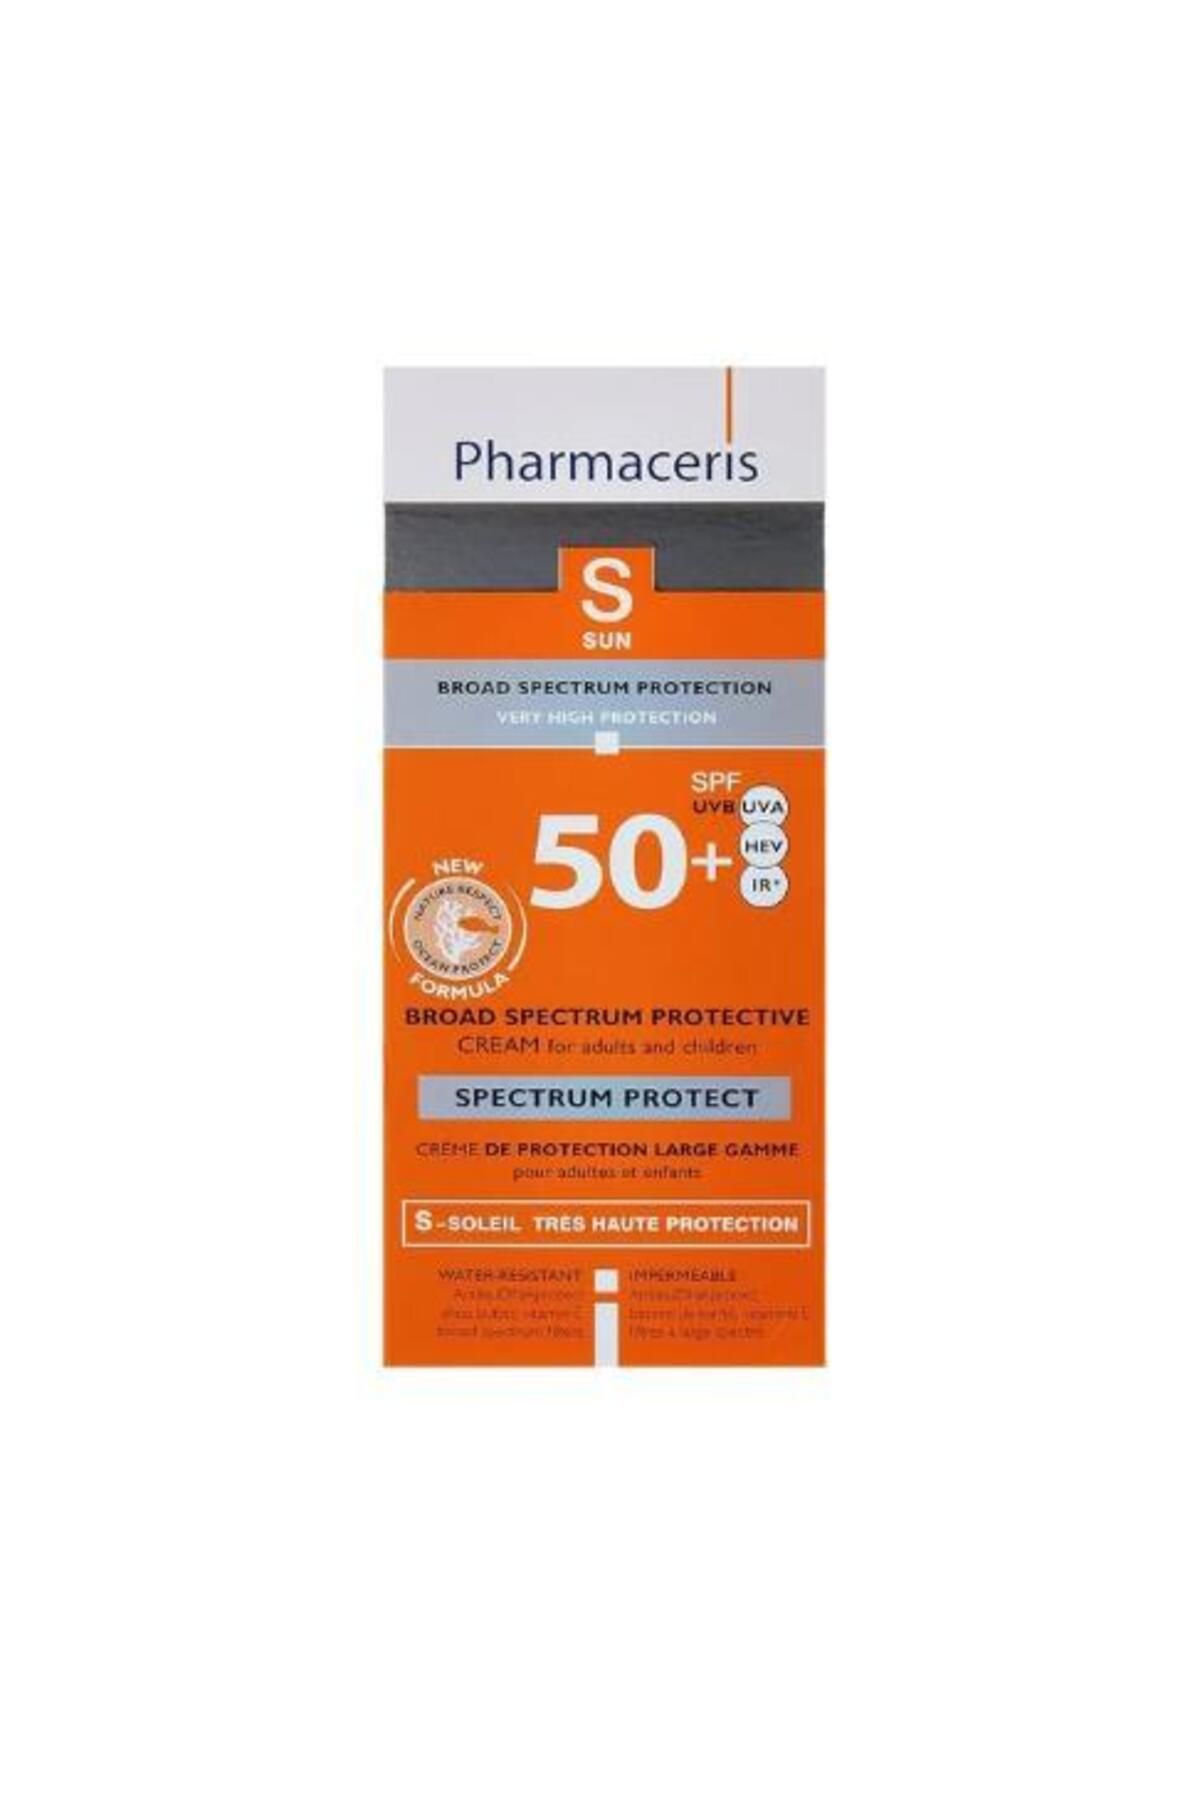 Pharmaceris S Broad Spectrum Protection Spf 50 50 ml